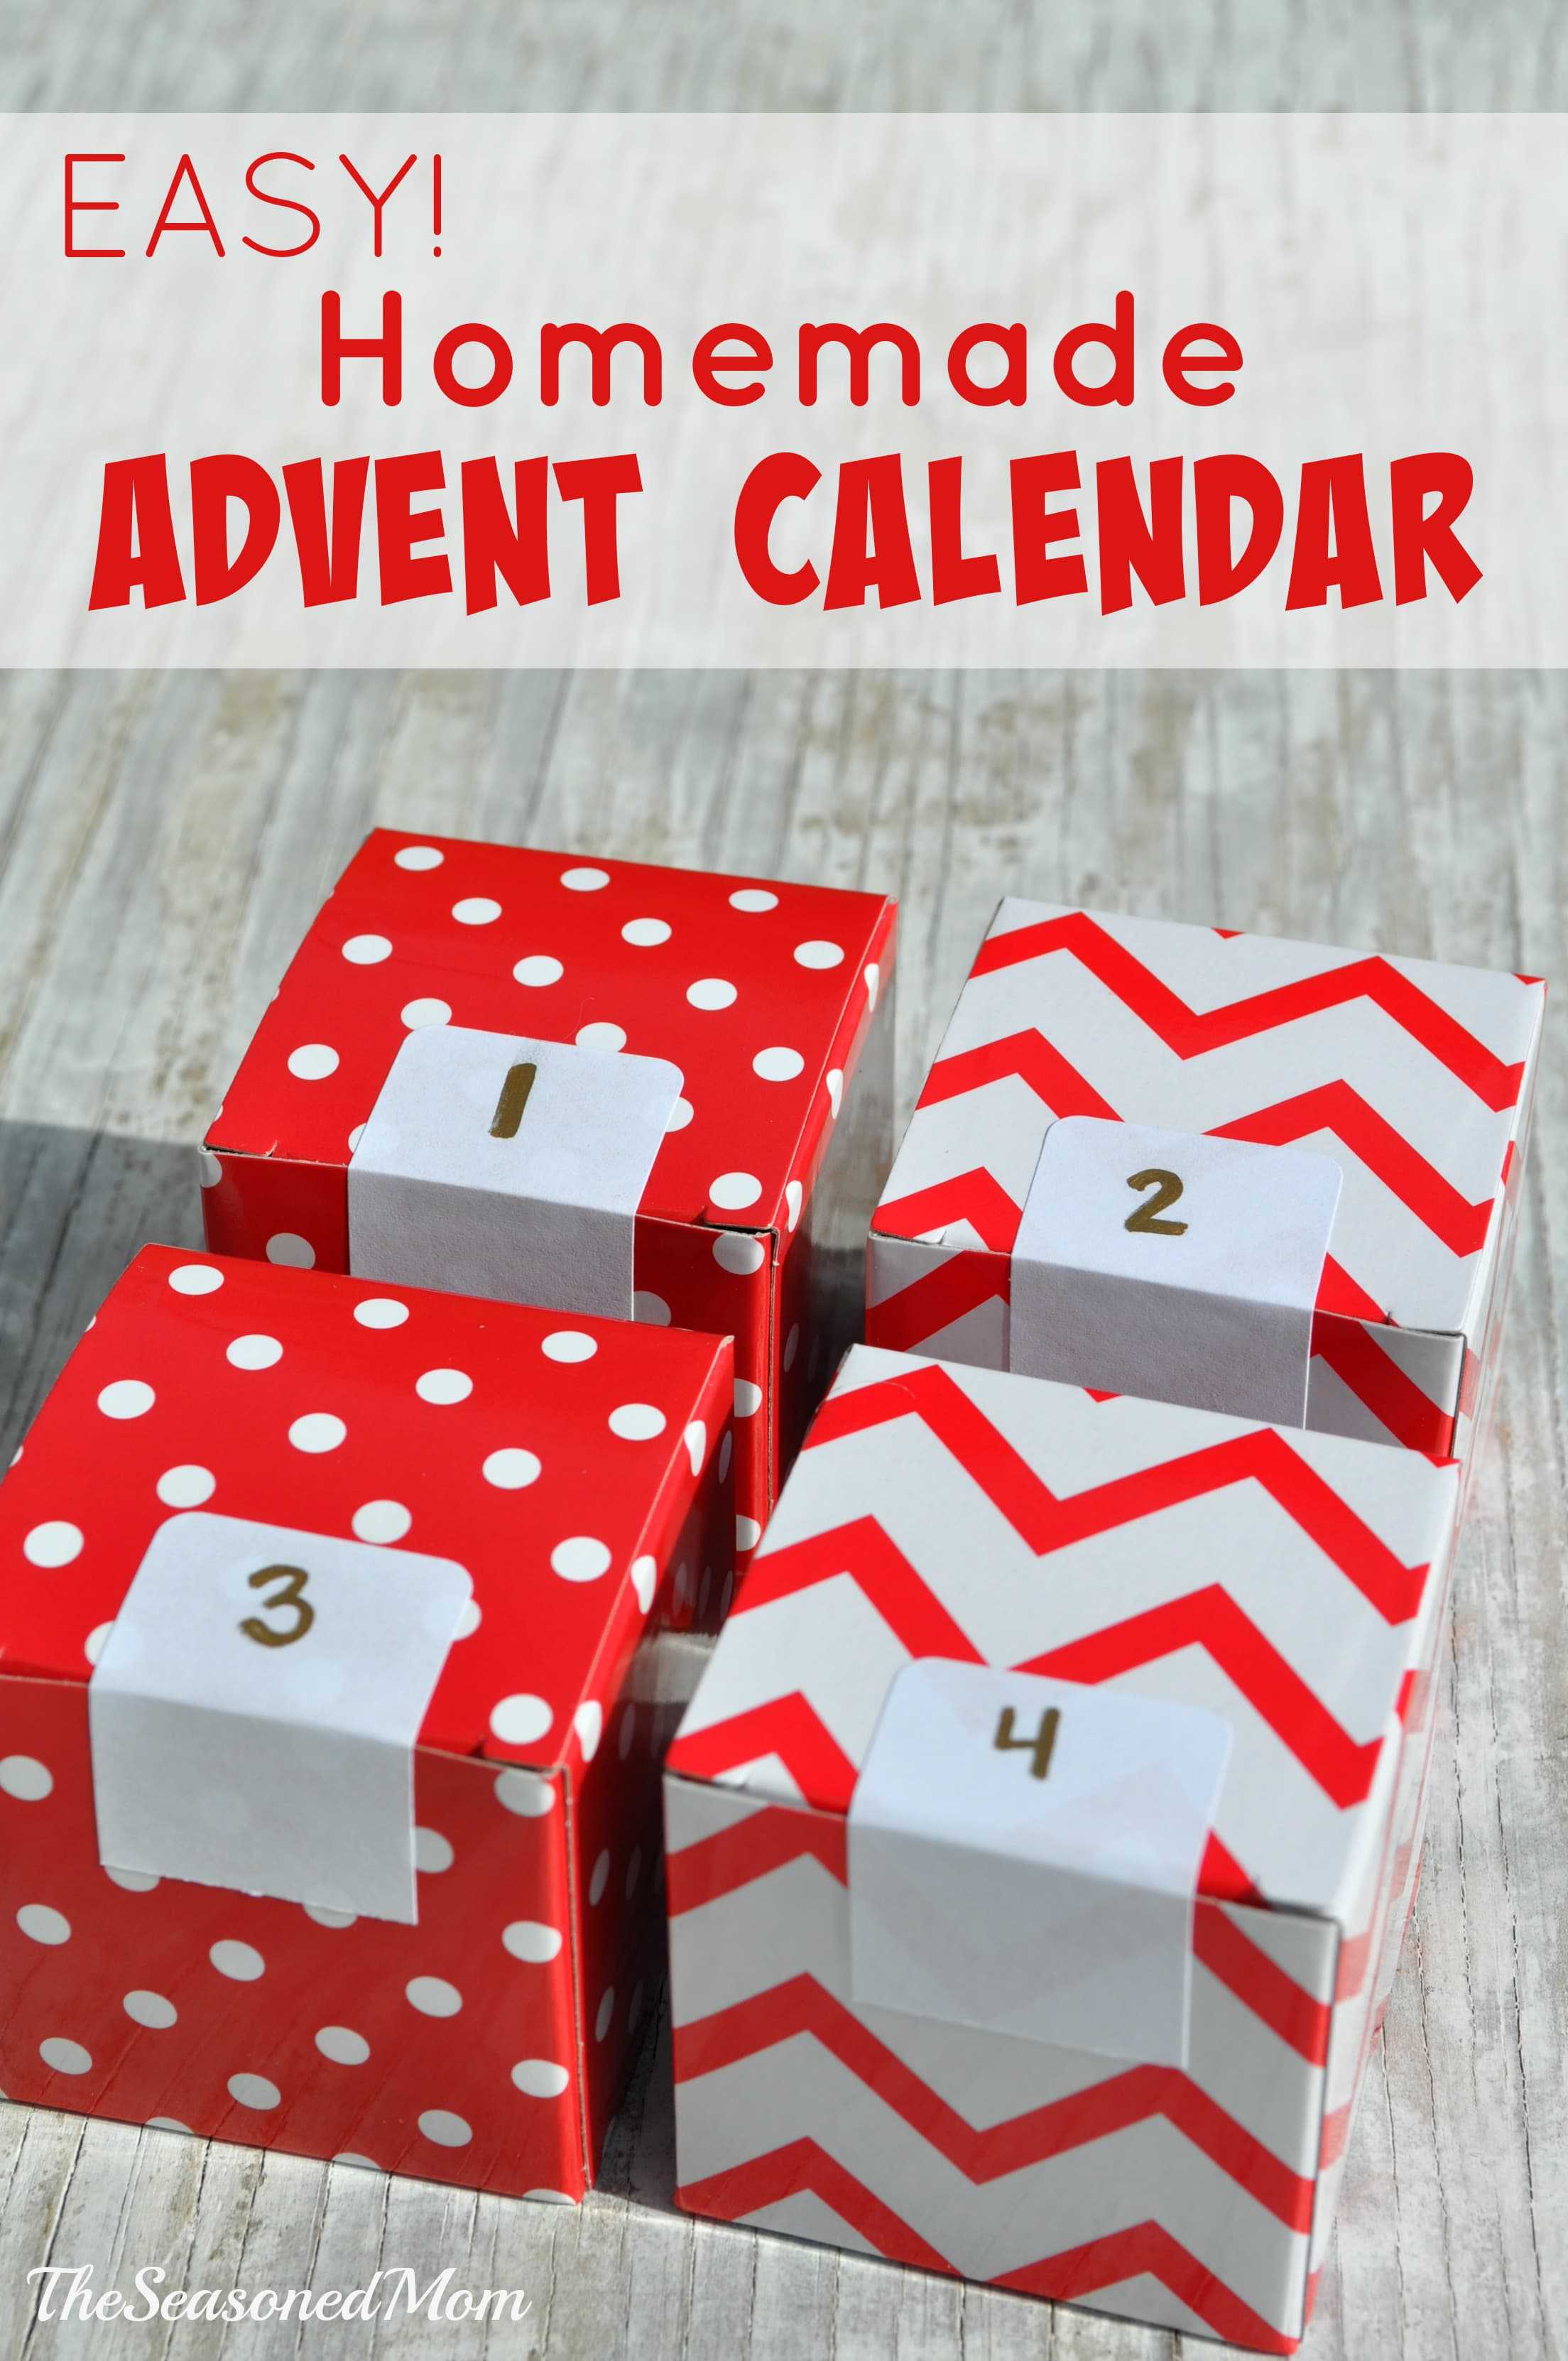 homemade-gifts-made-easy-printable-calendar-image-to-u-todays-gift-is-a-printable-calendar